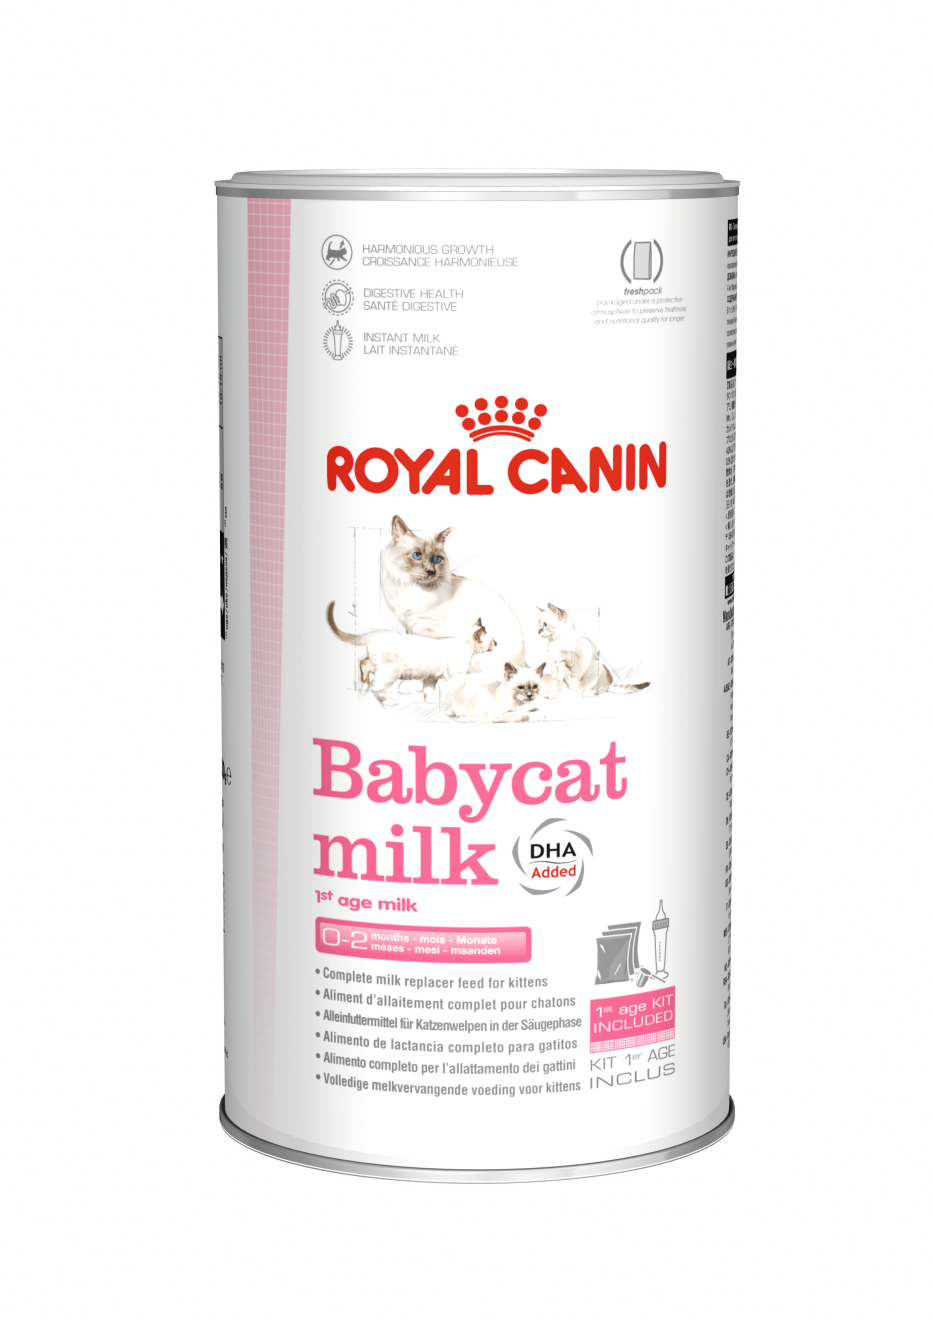 Royal Canin Babycat Milk verpakking 